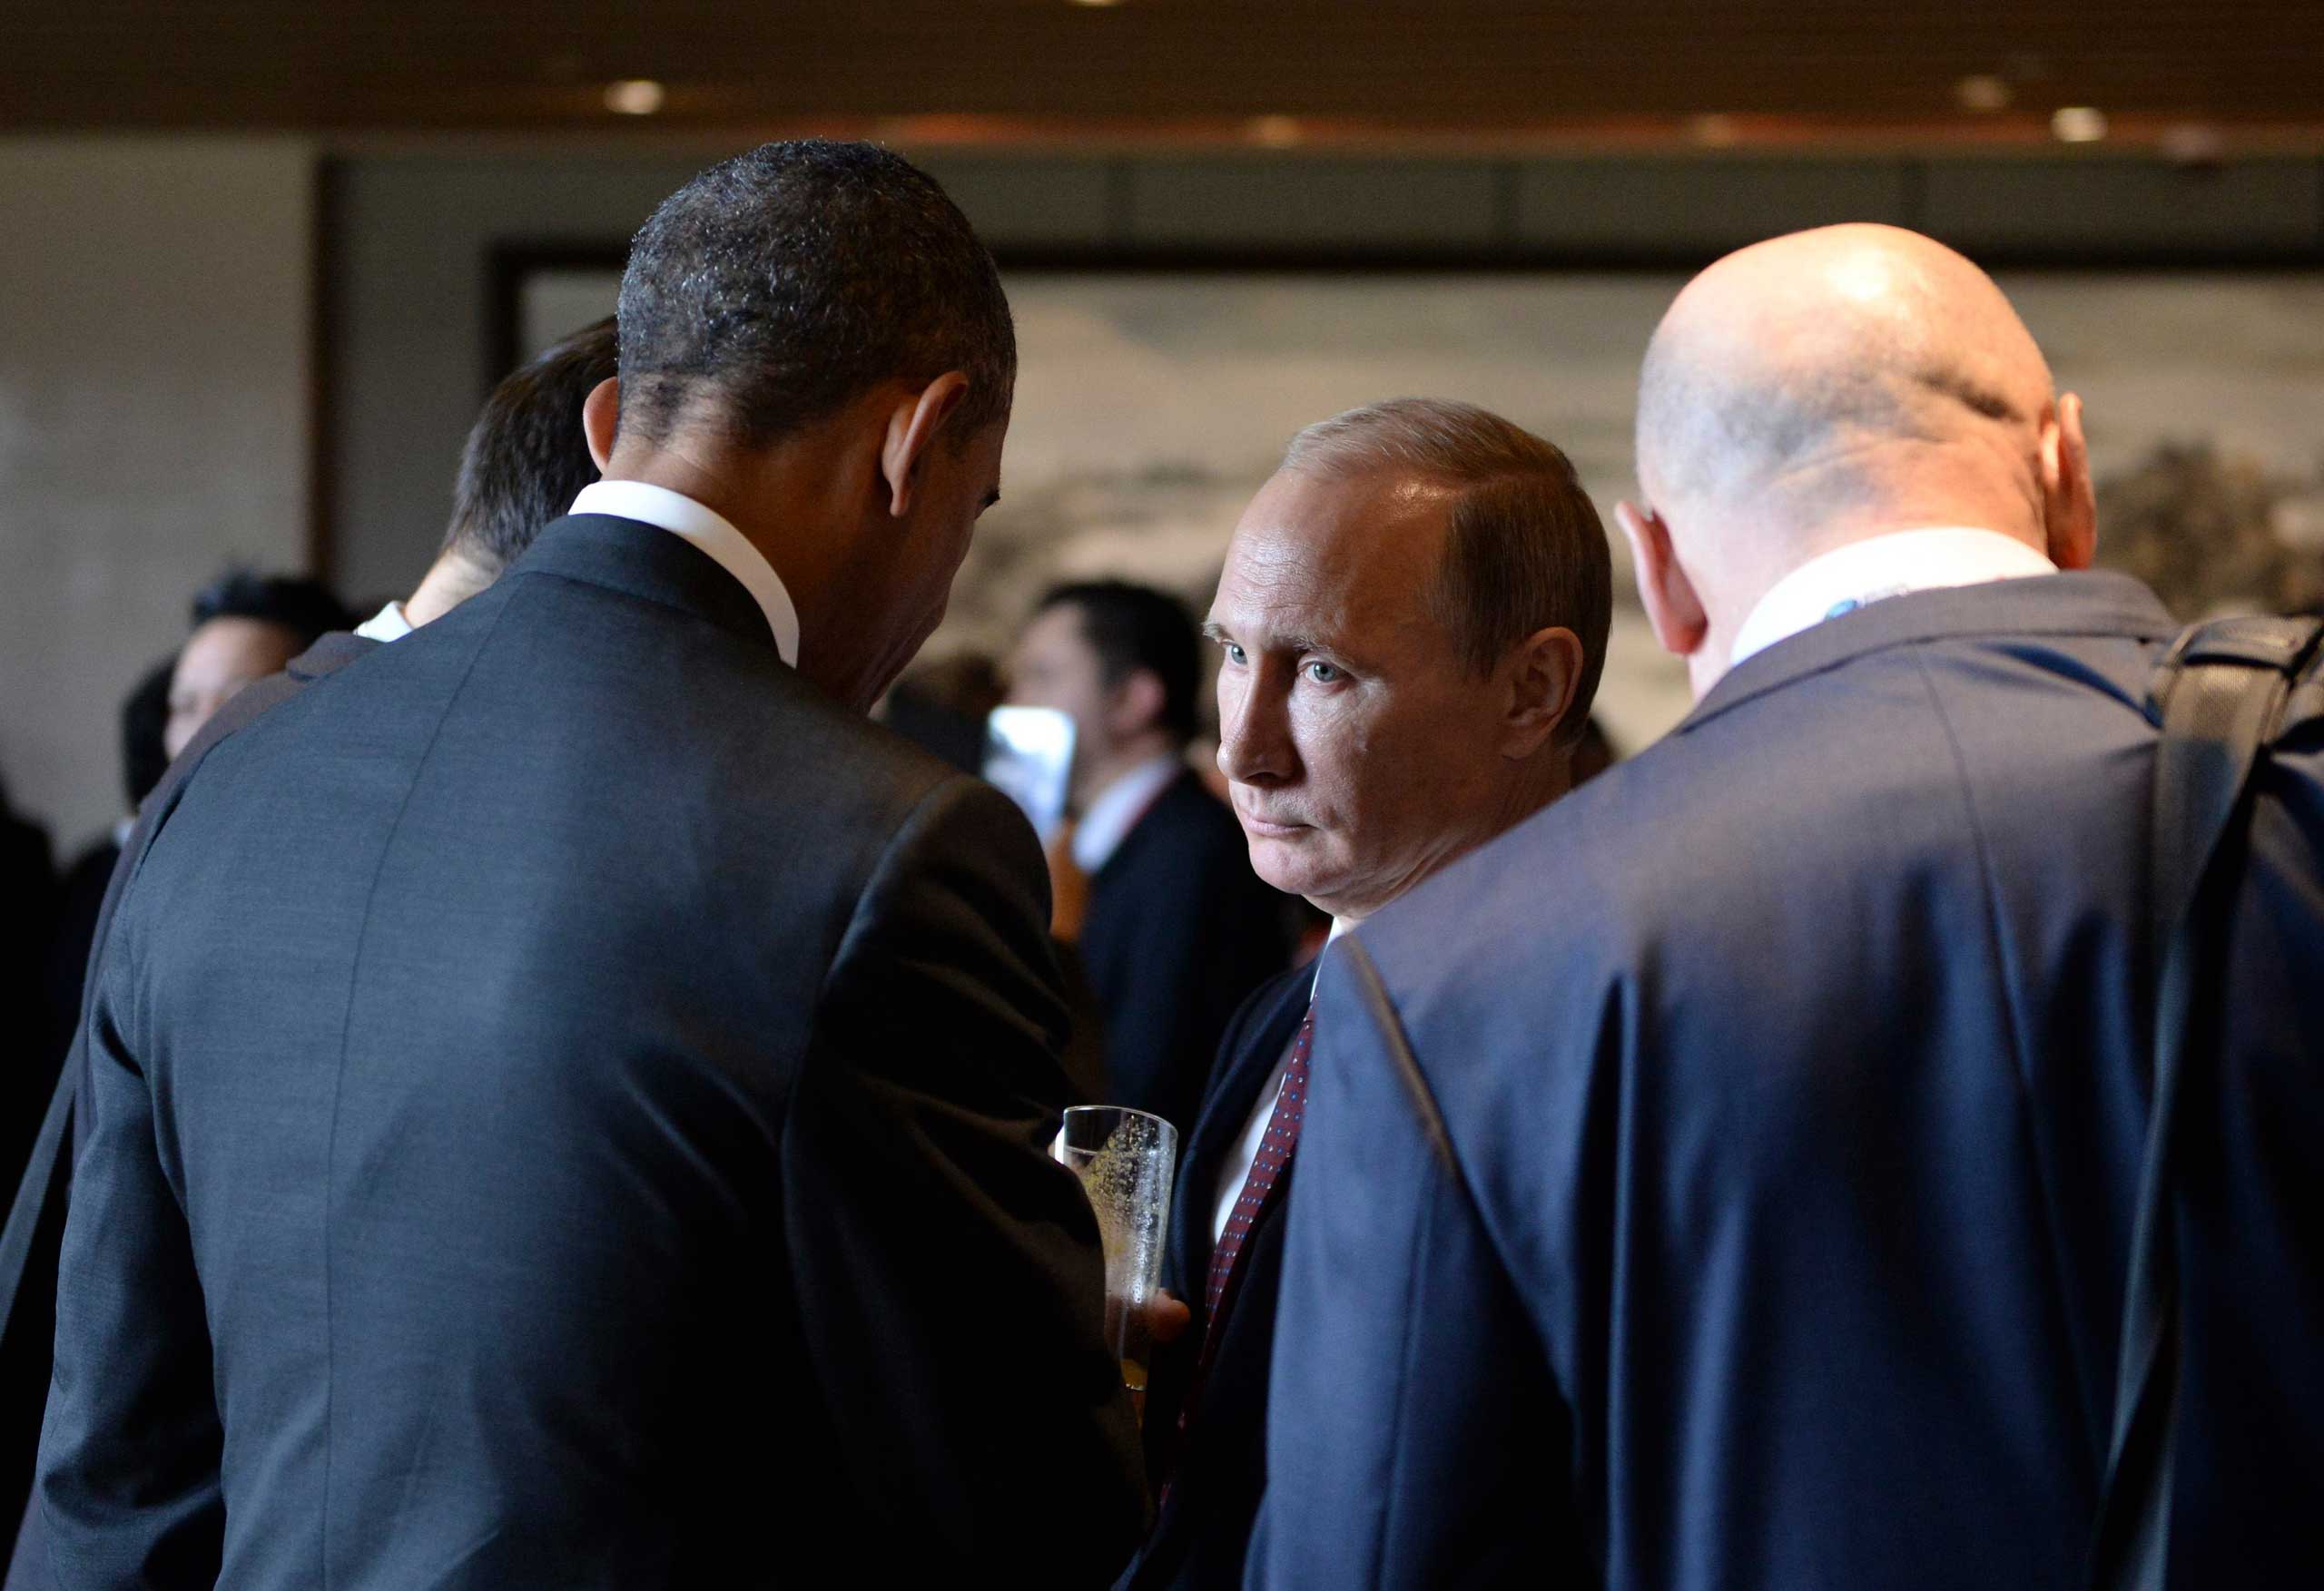 Russian President Vladimir Putin seen talking to President Barack Obama during the Asia Pacific Economic Cooperation Summit in Beijing, Nov. 11, 2014. (RIA Novosti/Reuters)